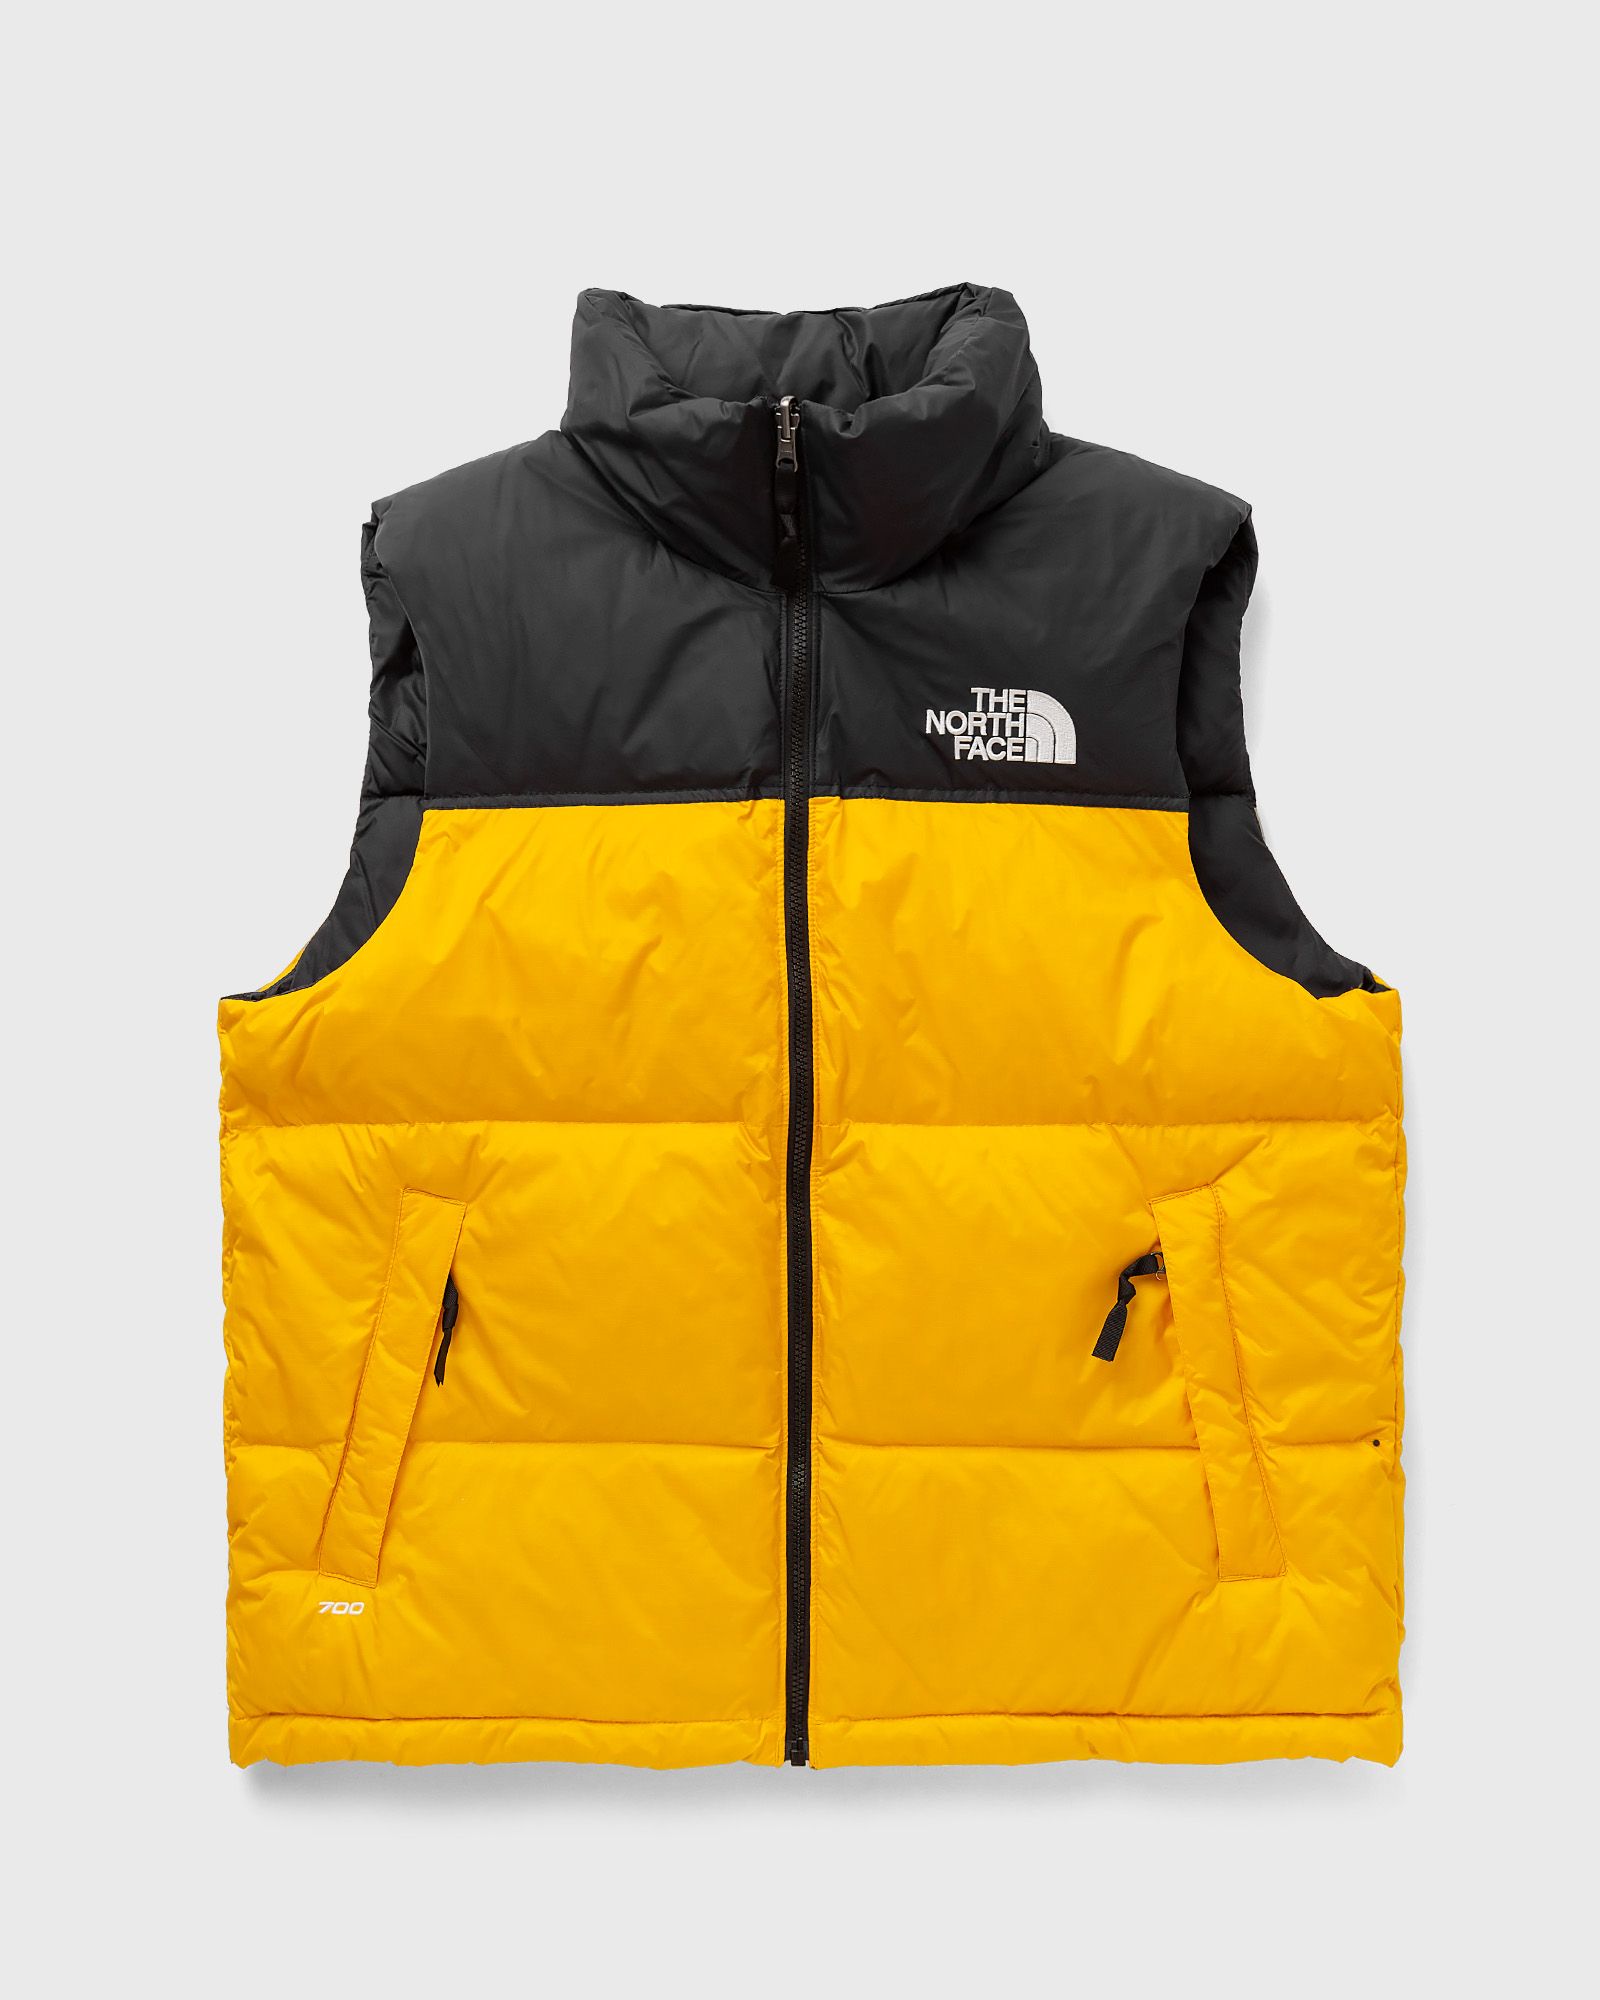 The North Face - 1996 retro nuptse vest men vests black|yellow in größe:l